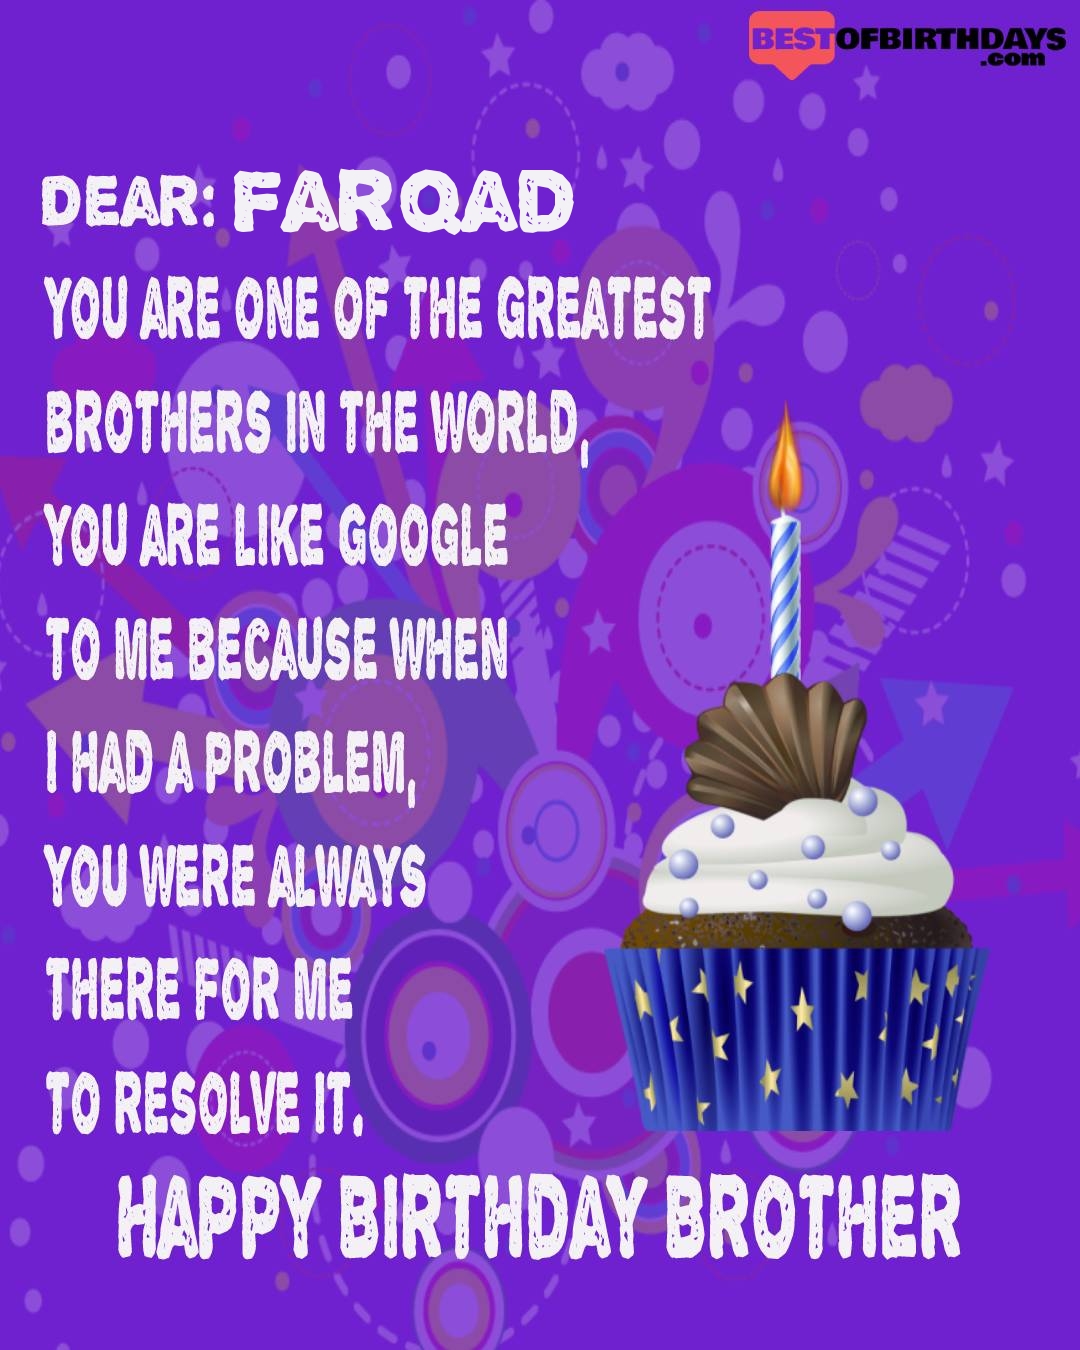 Happy birthday farqad bhai brother bro